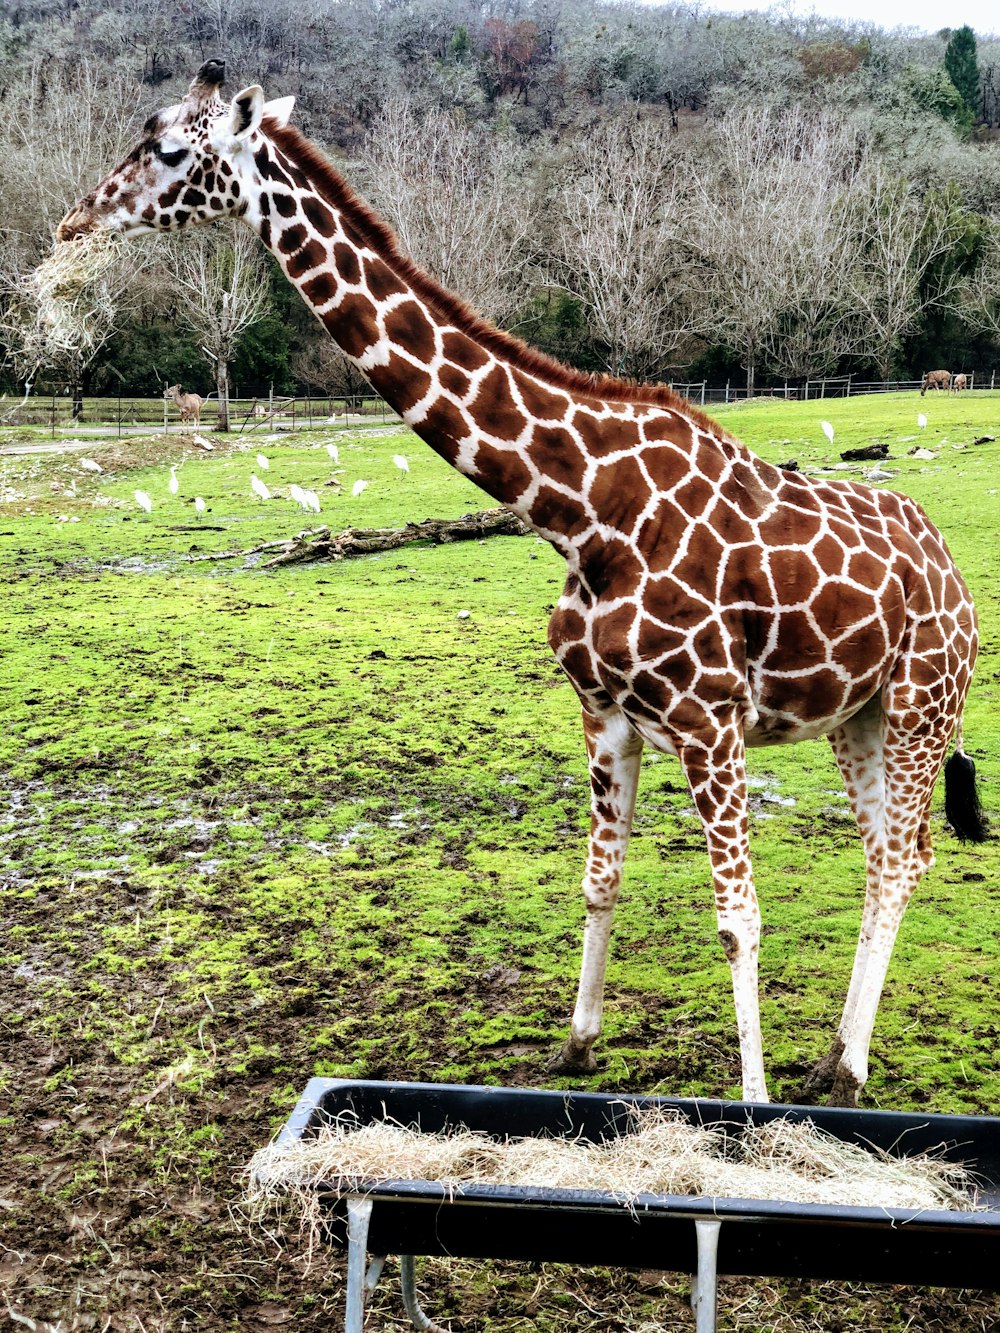 giraffe eating grass during daytime